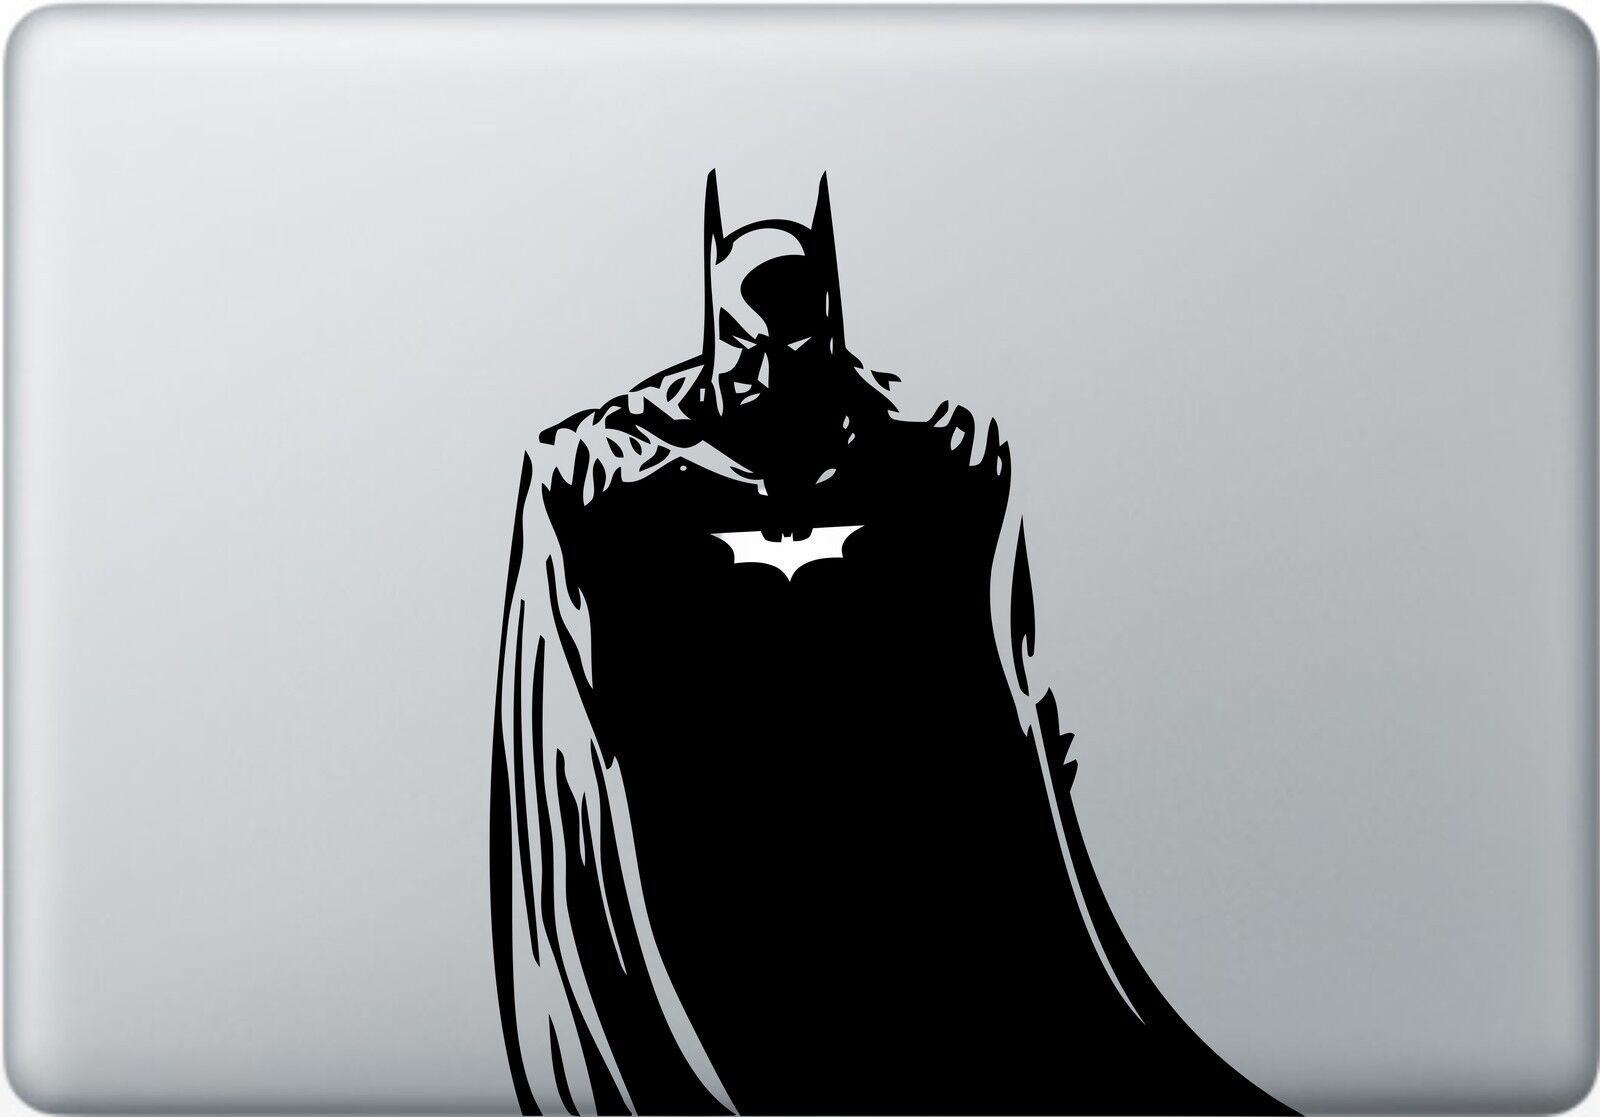 Batman Standing Apple Macbook Laptop Air Pro Decal Sticker Skin Viny Dark Knight